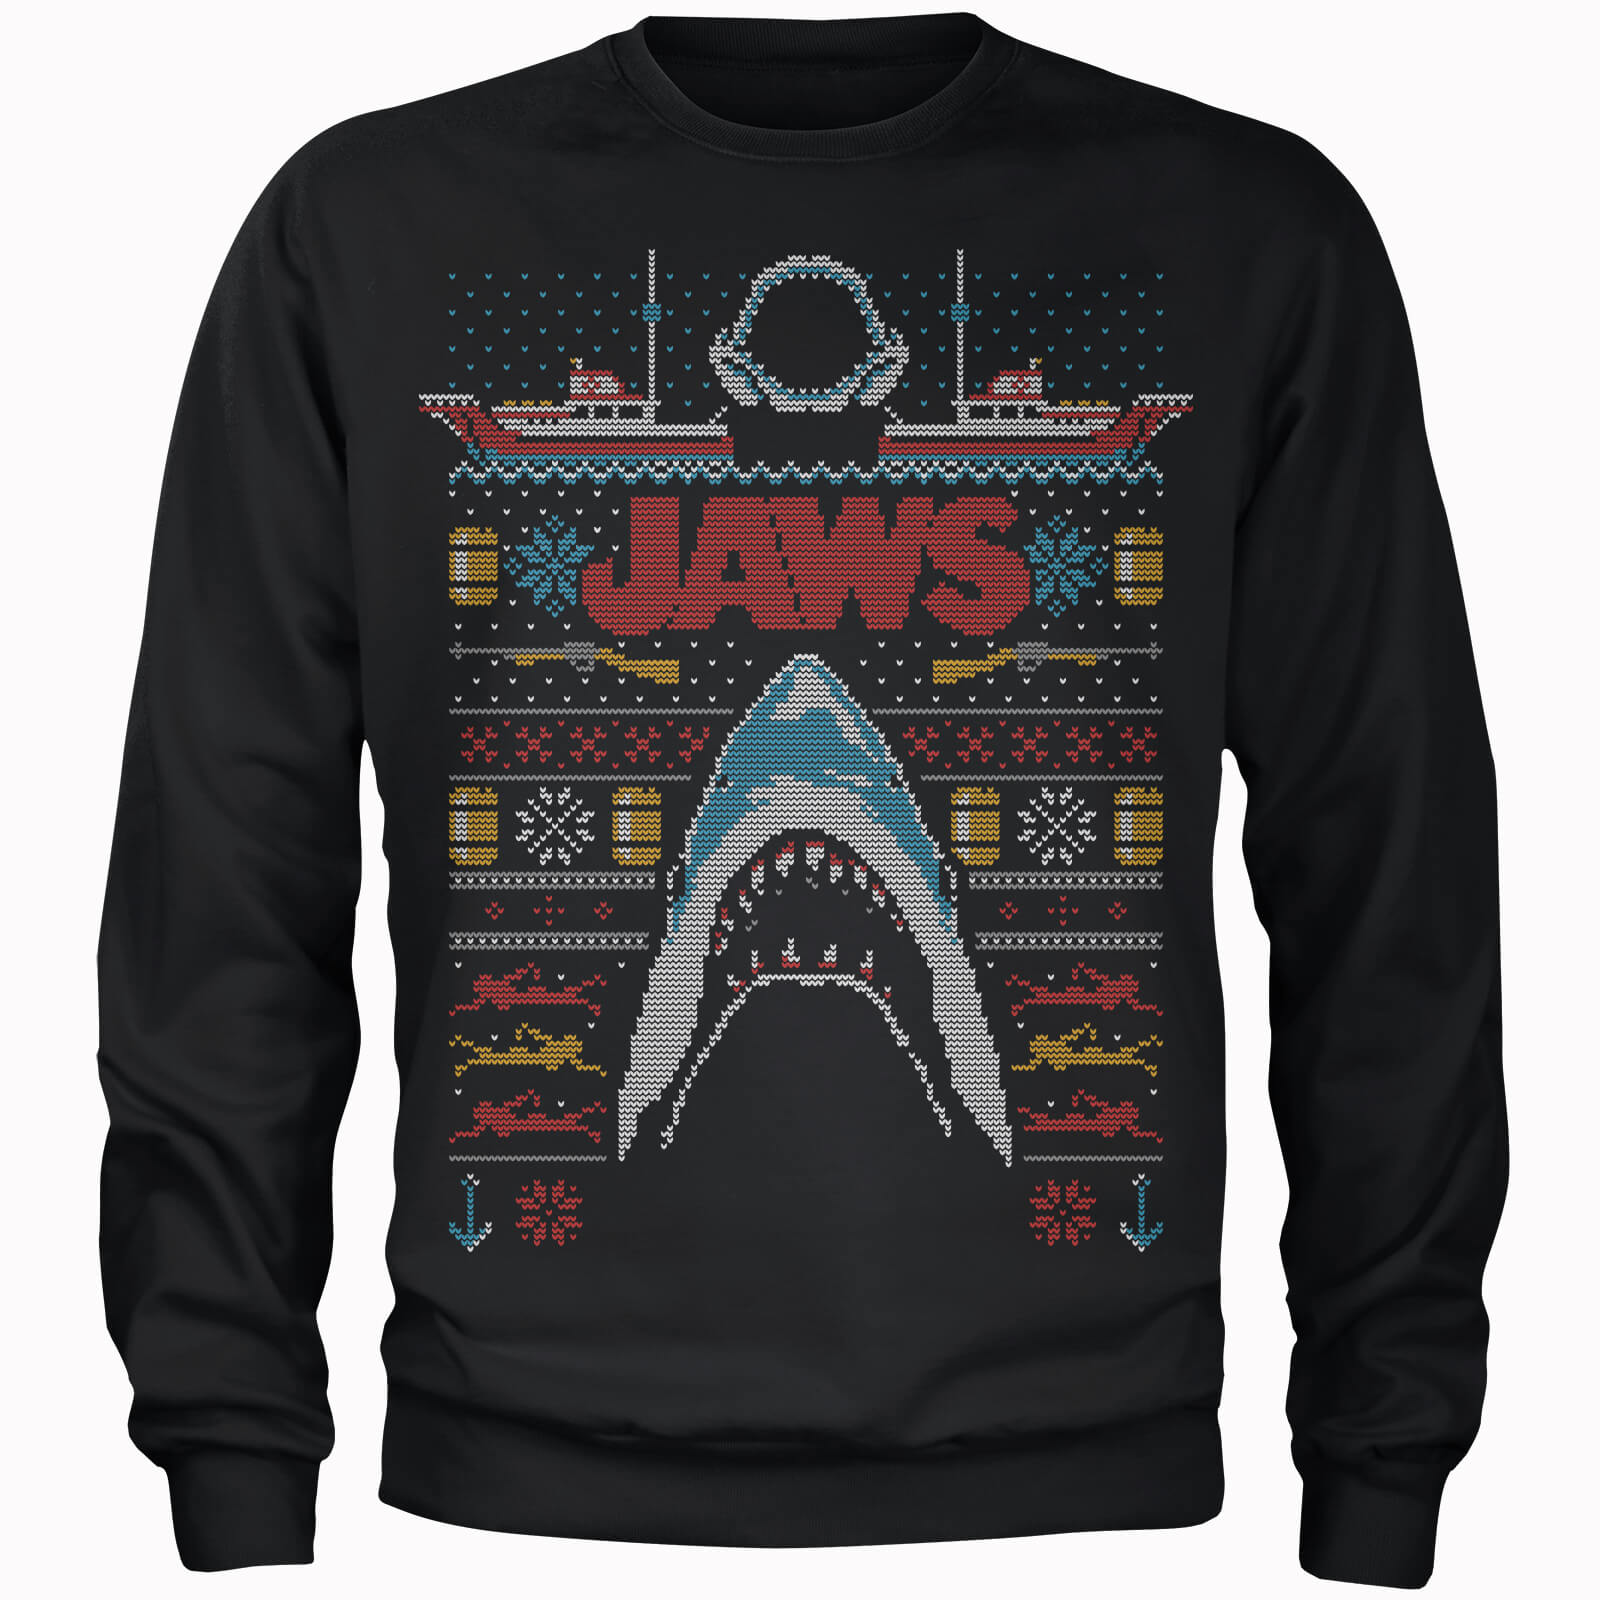 Jaws Fairisle Men's Christmas Jumper - Black - S